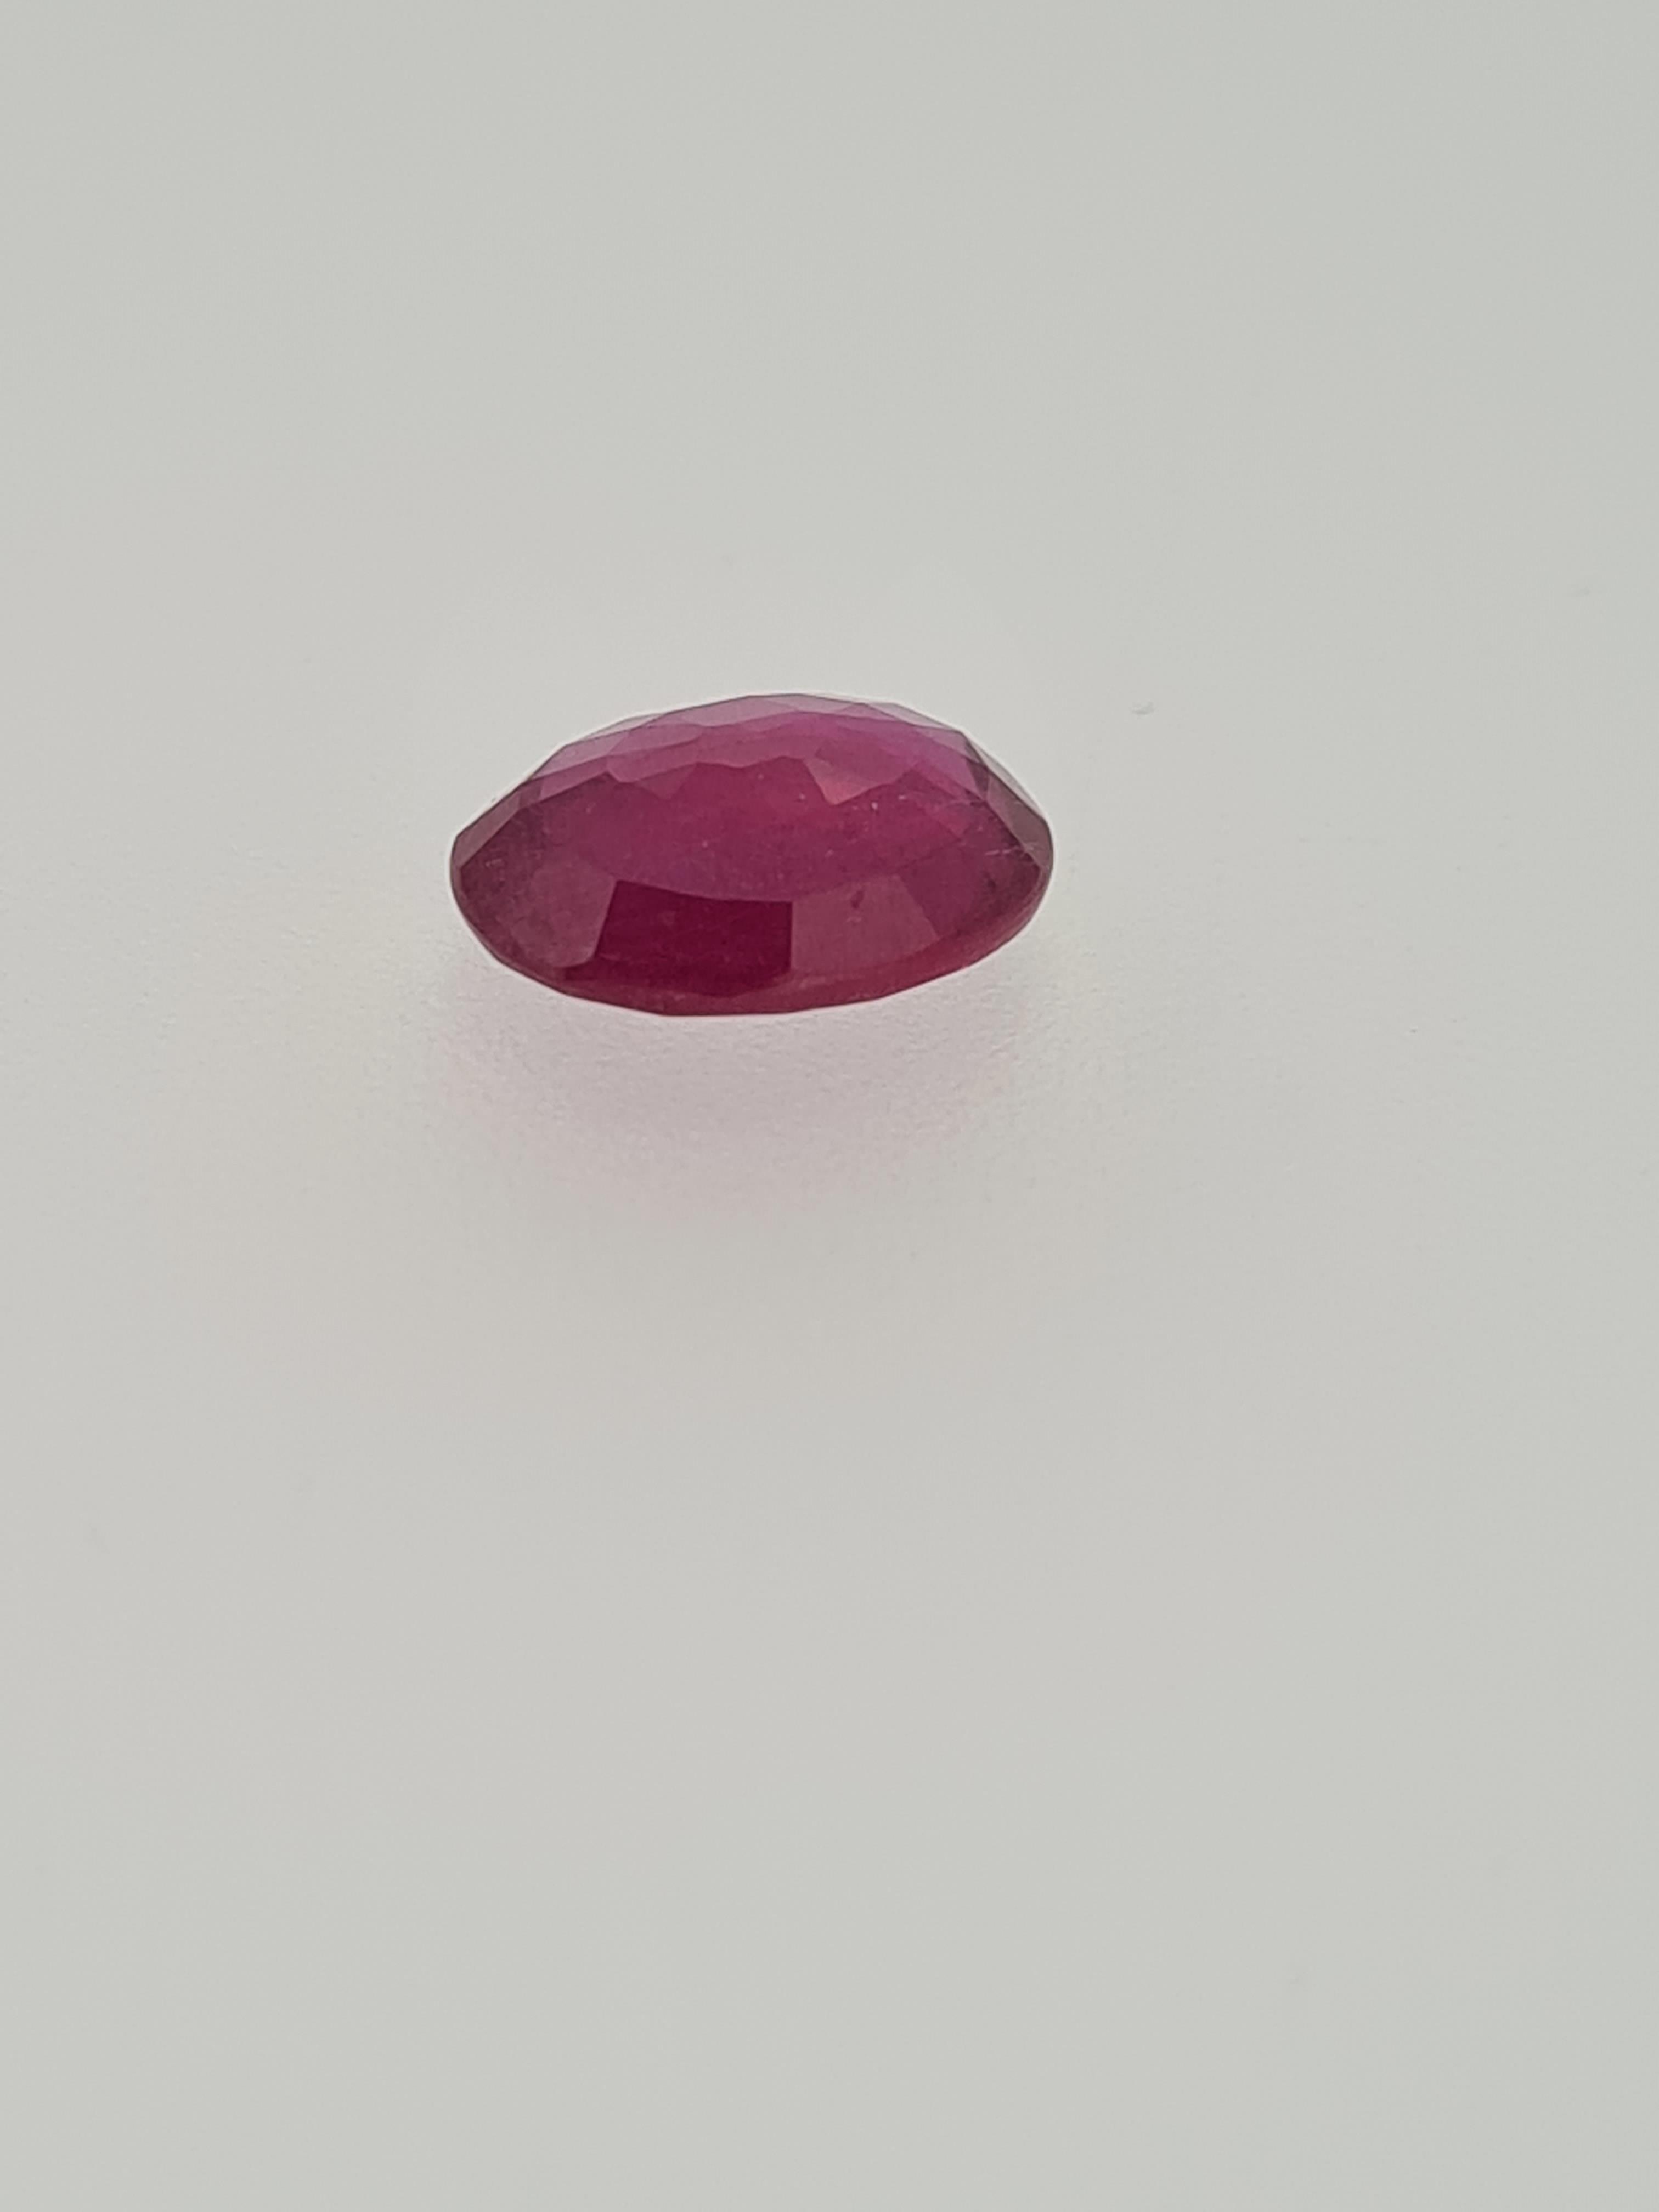 Ruby oval cut gem stone - Image 3 of 7